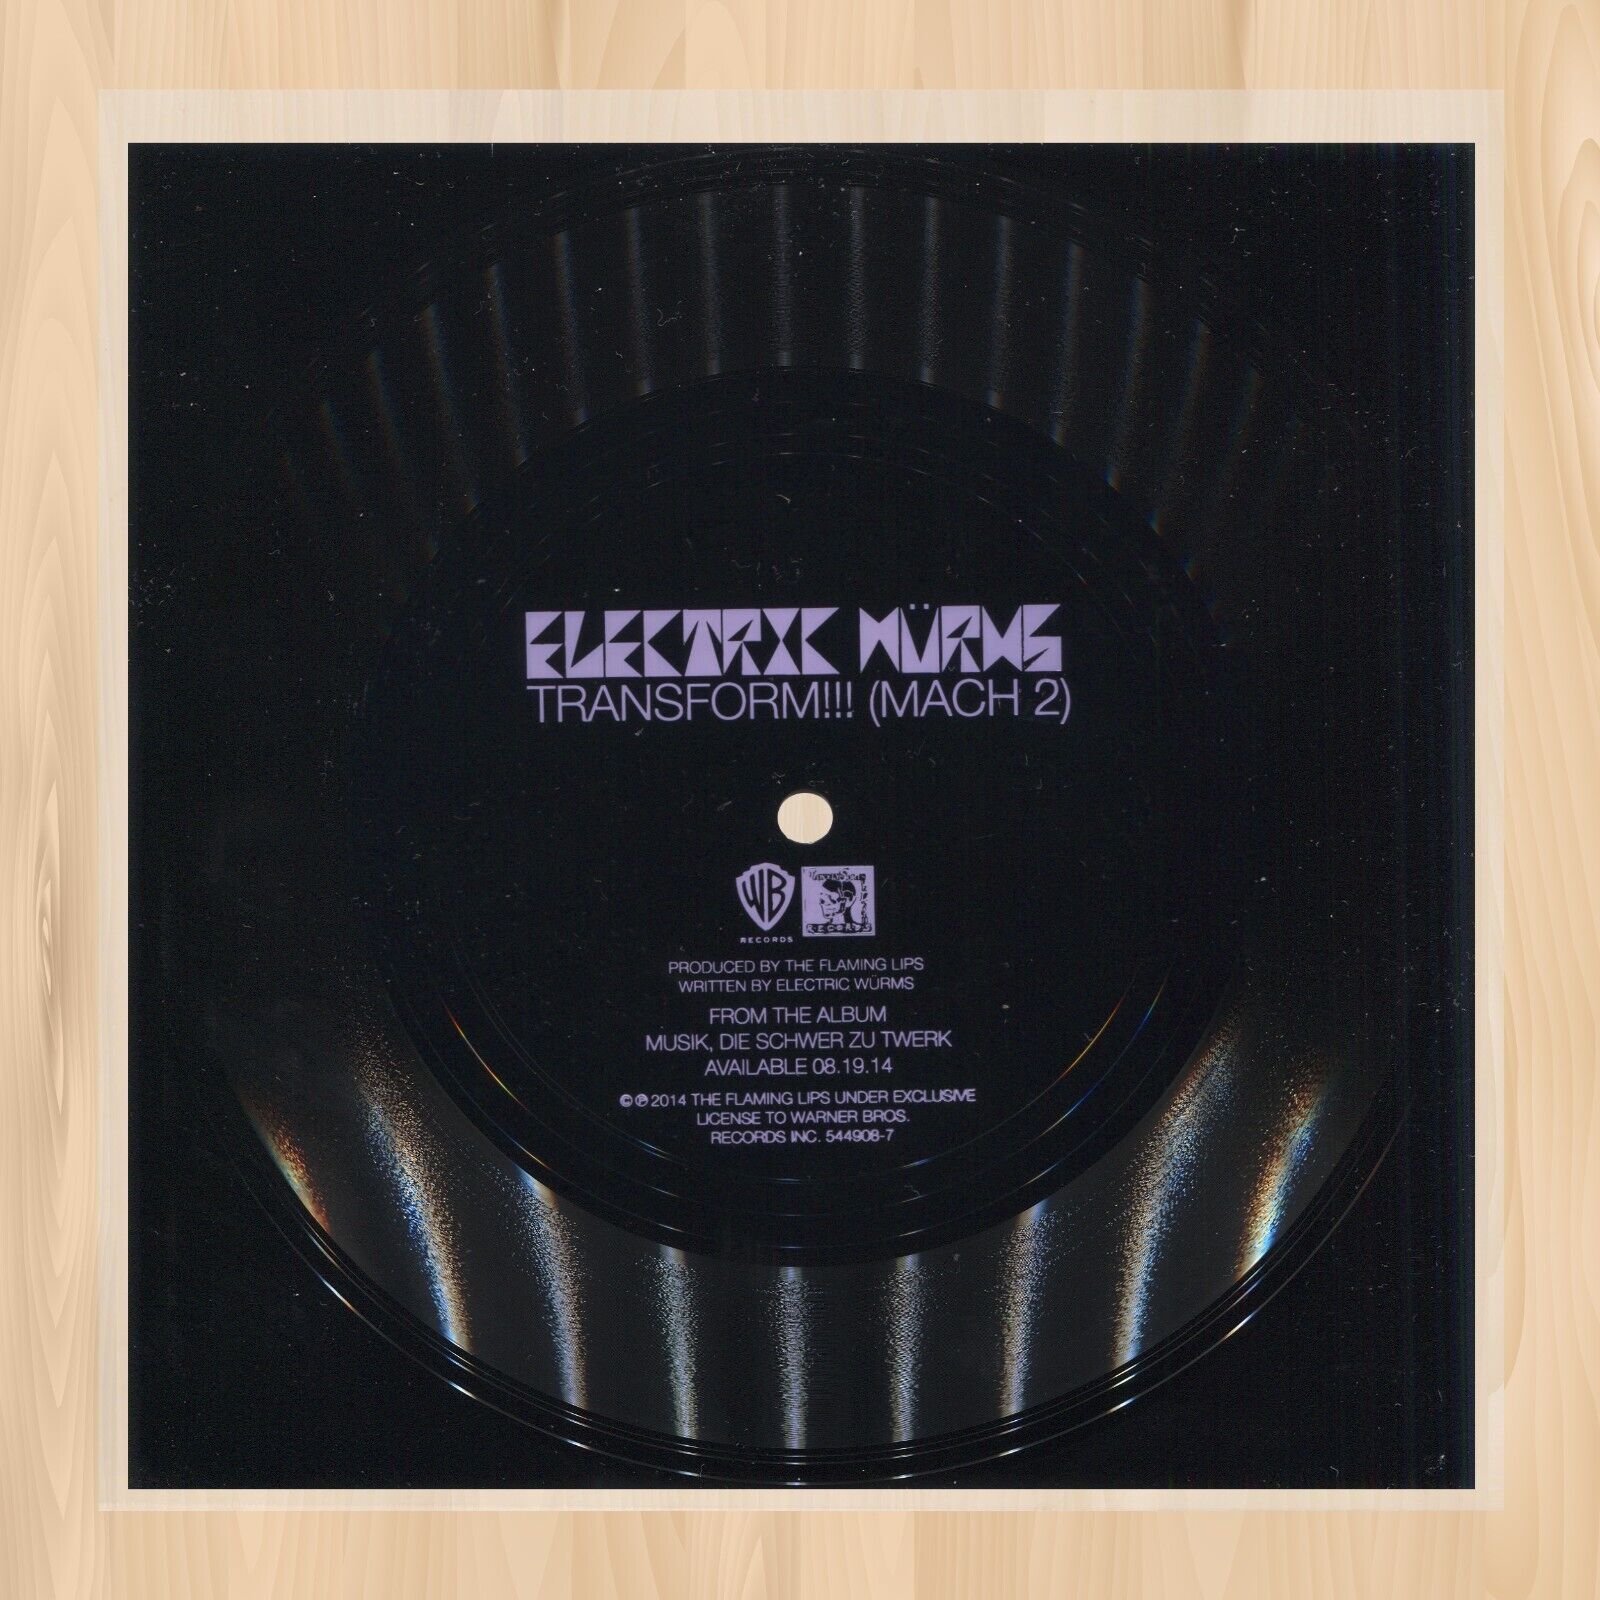 ELECTRIC WüRMS Transform!!! (Mach 2) FLEXI-DISC 7" VINYL Single Record      0412